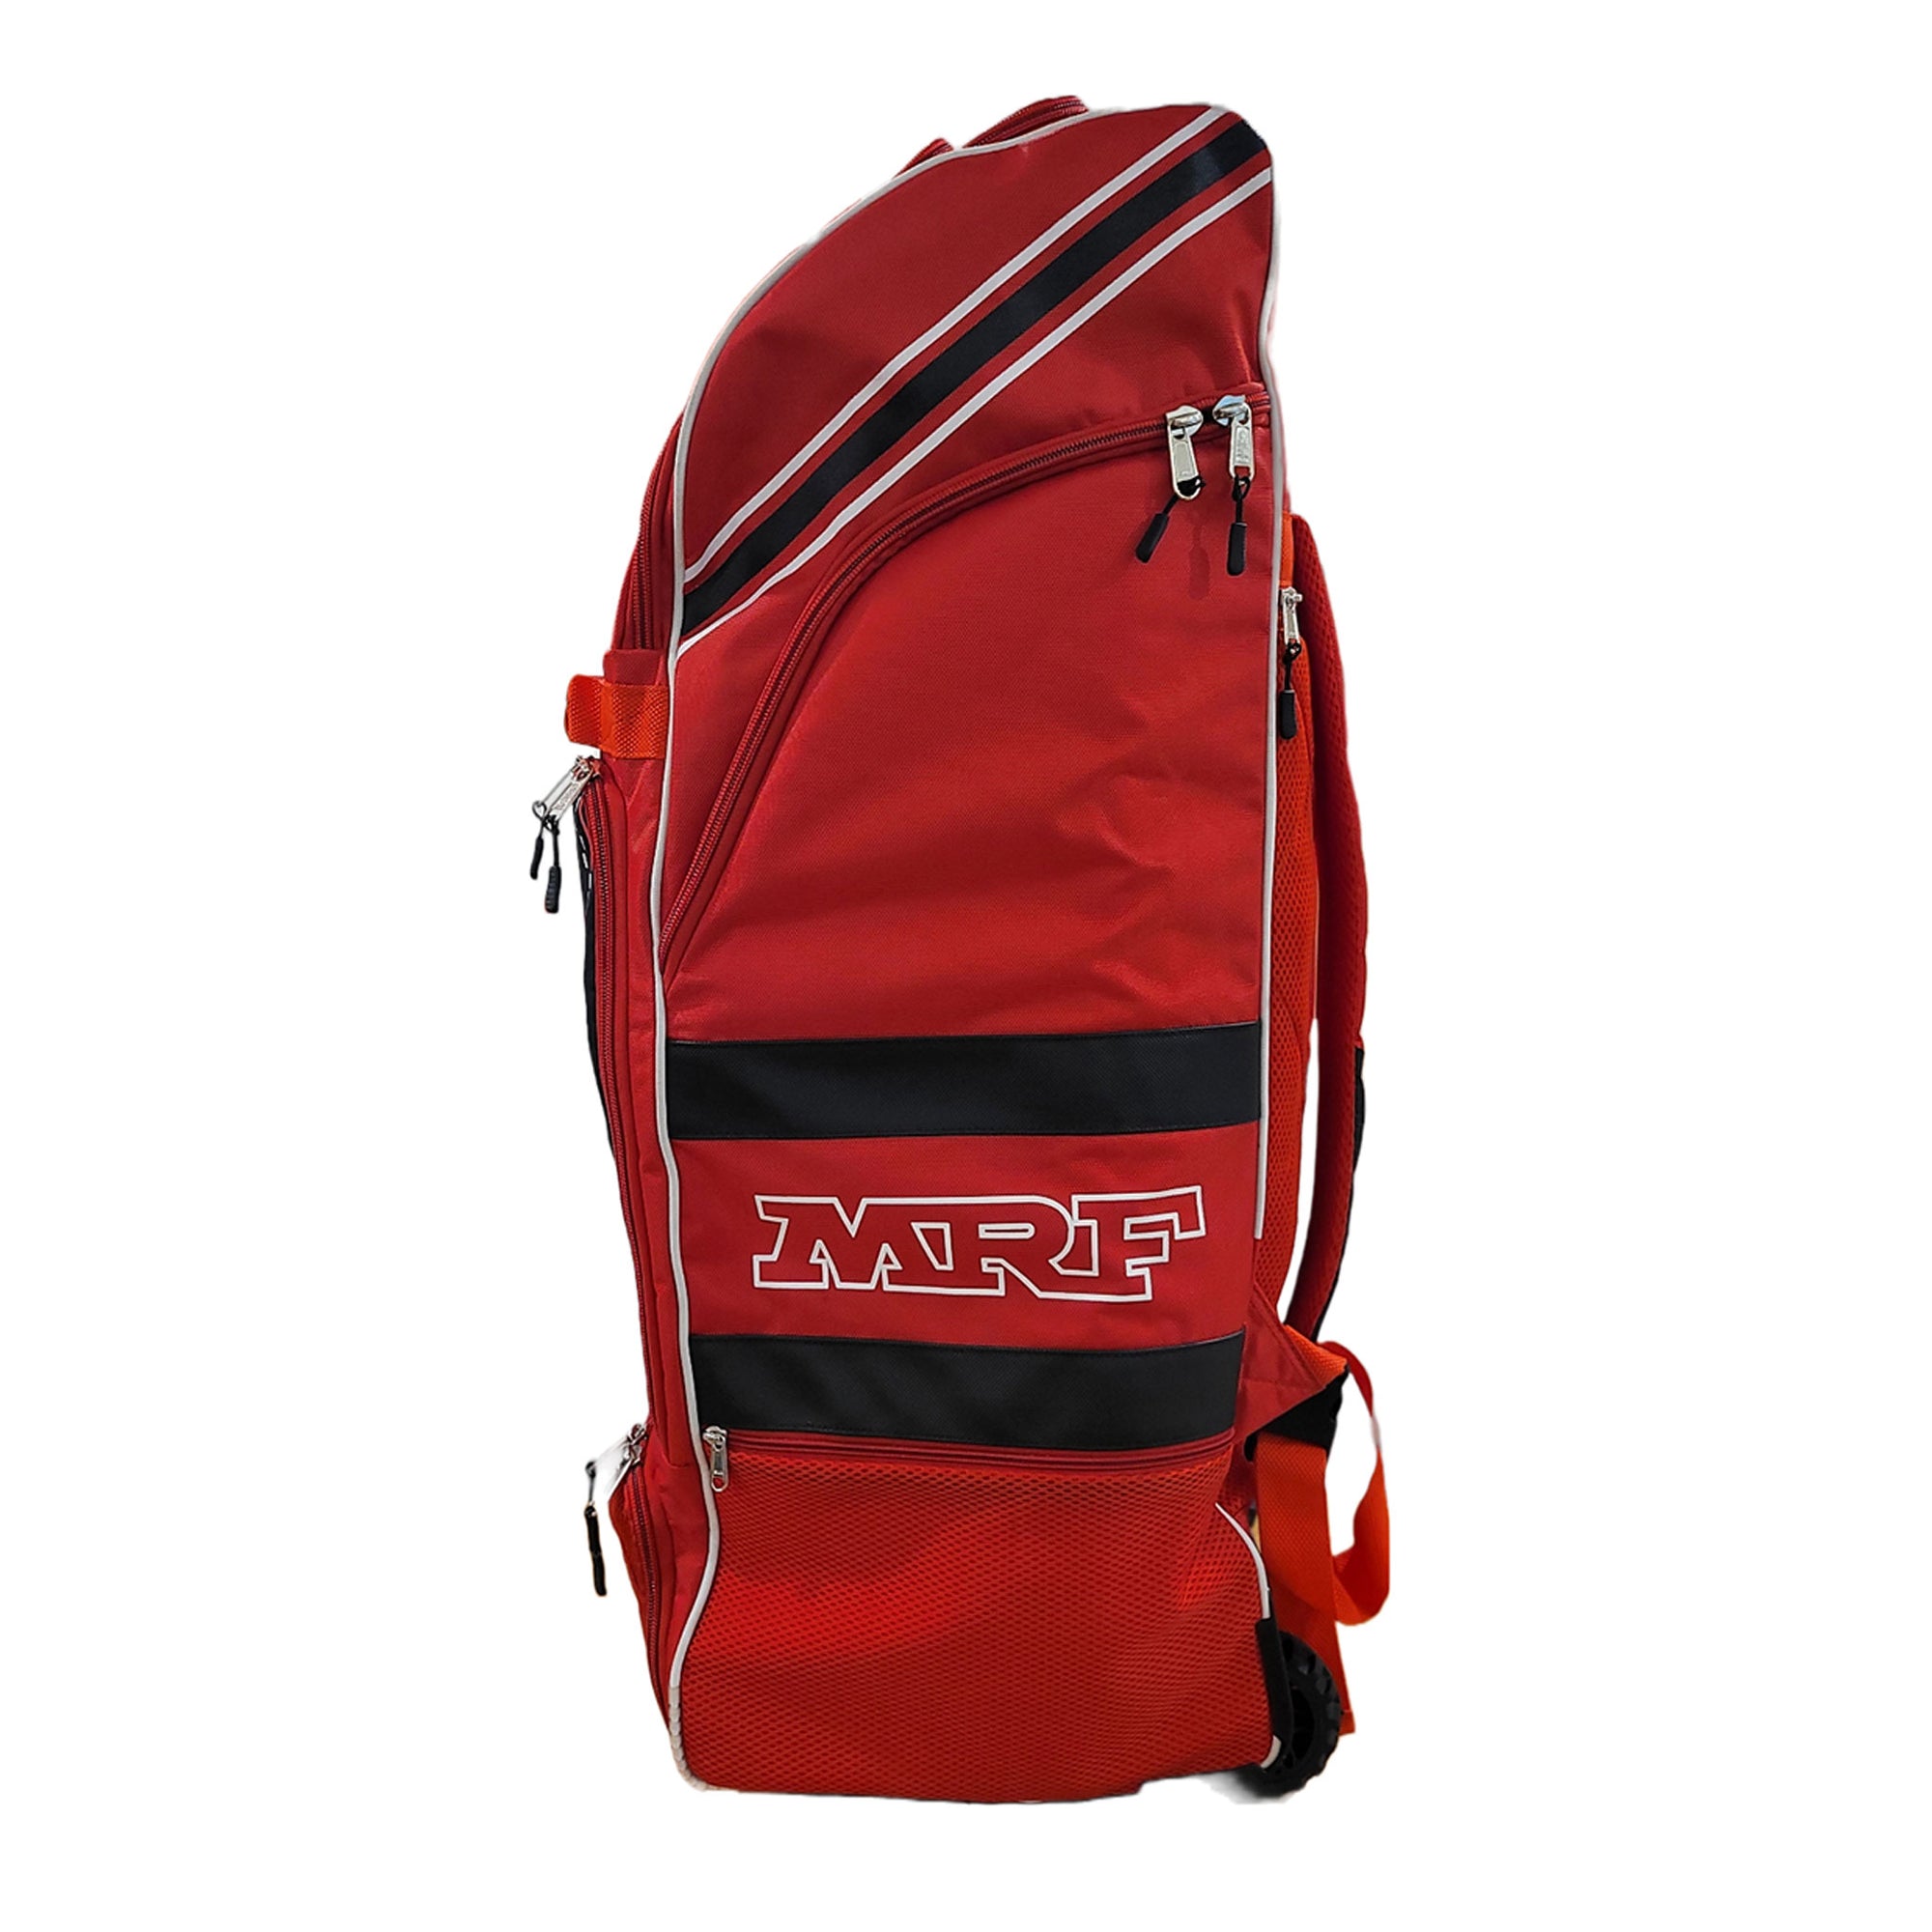 NB DC 680 Backpack II New Balance Backpack Bag Cricket Kit Bag Sports  Backpack Shoulder Kit Bag Large : Amazon.in: Bags, Wallets and Luggage